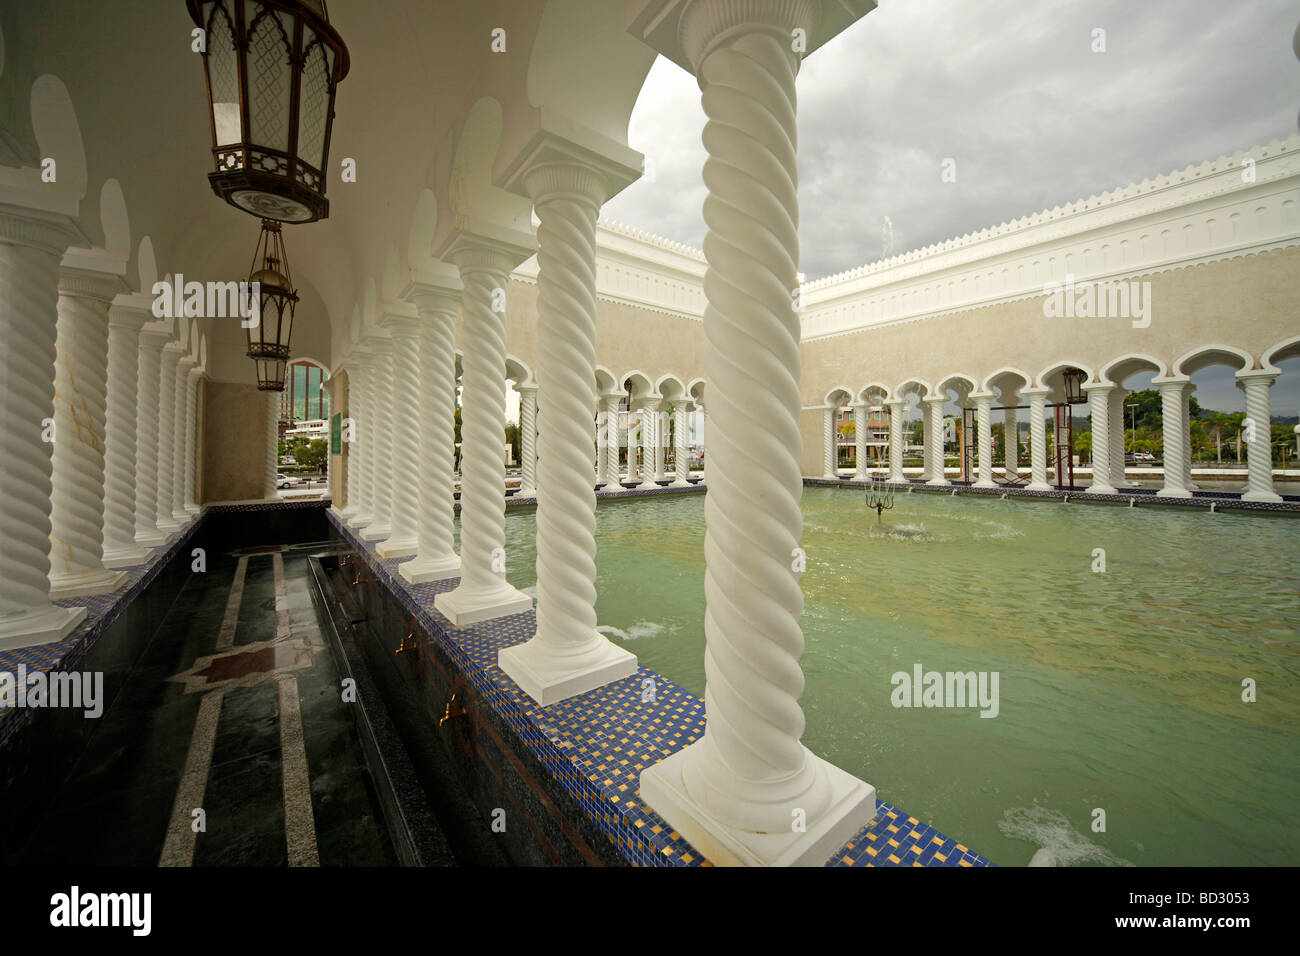 Fountain and pillars in the Royal Mosque of Sultan Omar Ali Saifuddin in Bandar Seri Begawan Brunei Asia Stock Photo